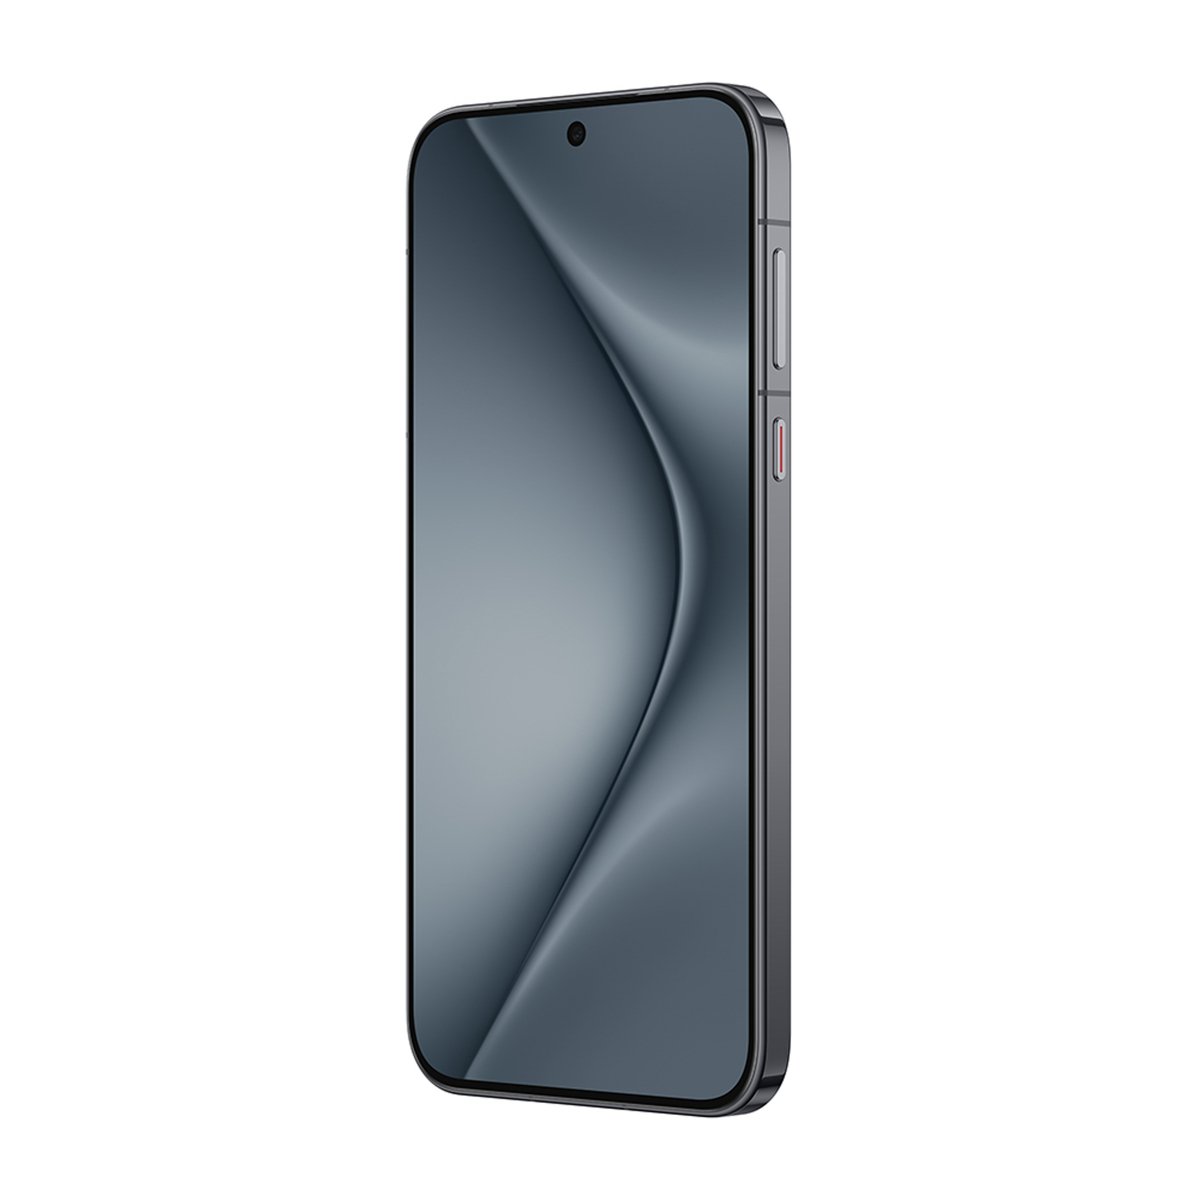 Huawei Pura 70 5G Smartphone, 12 GB RAM, 256 GB Storage, Black